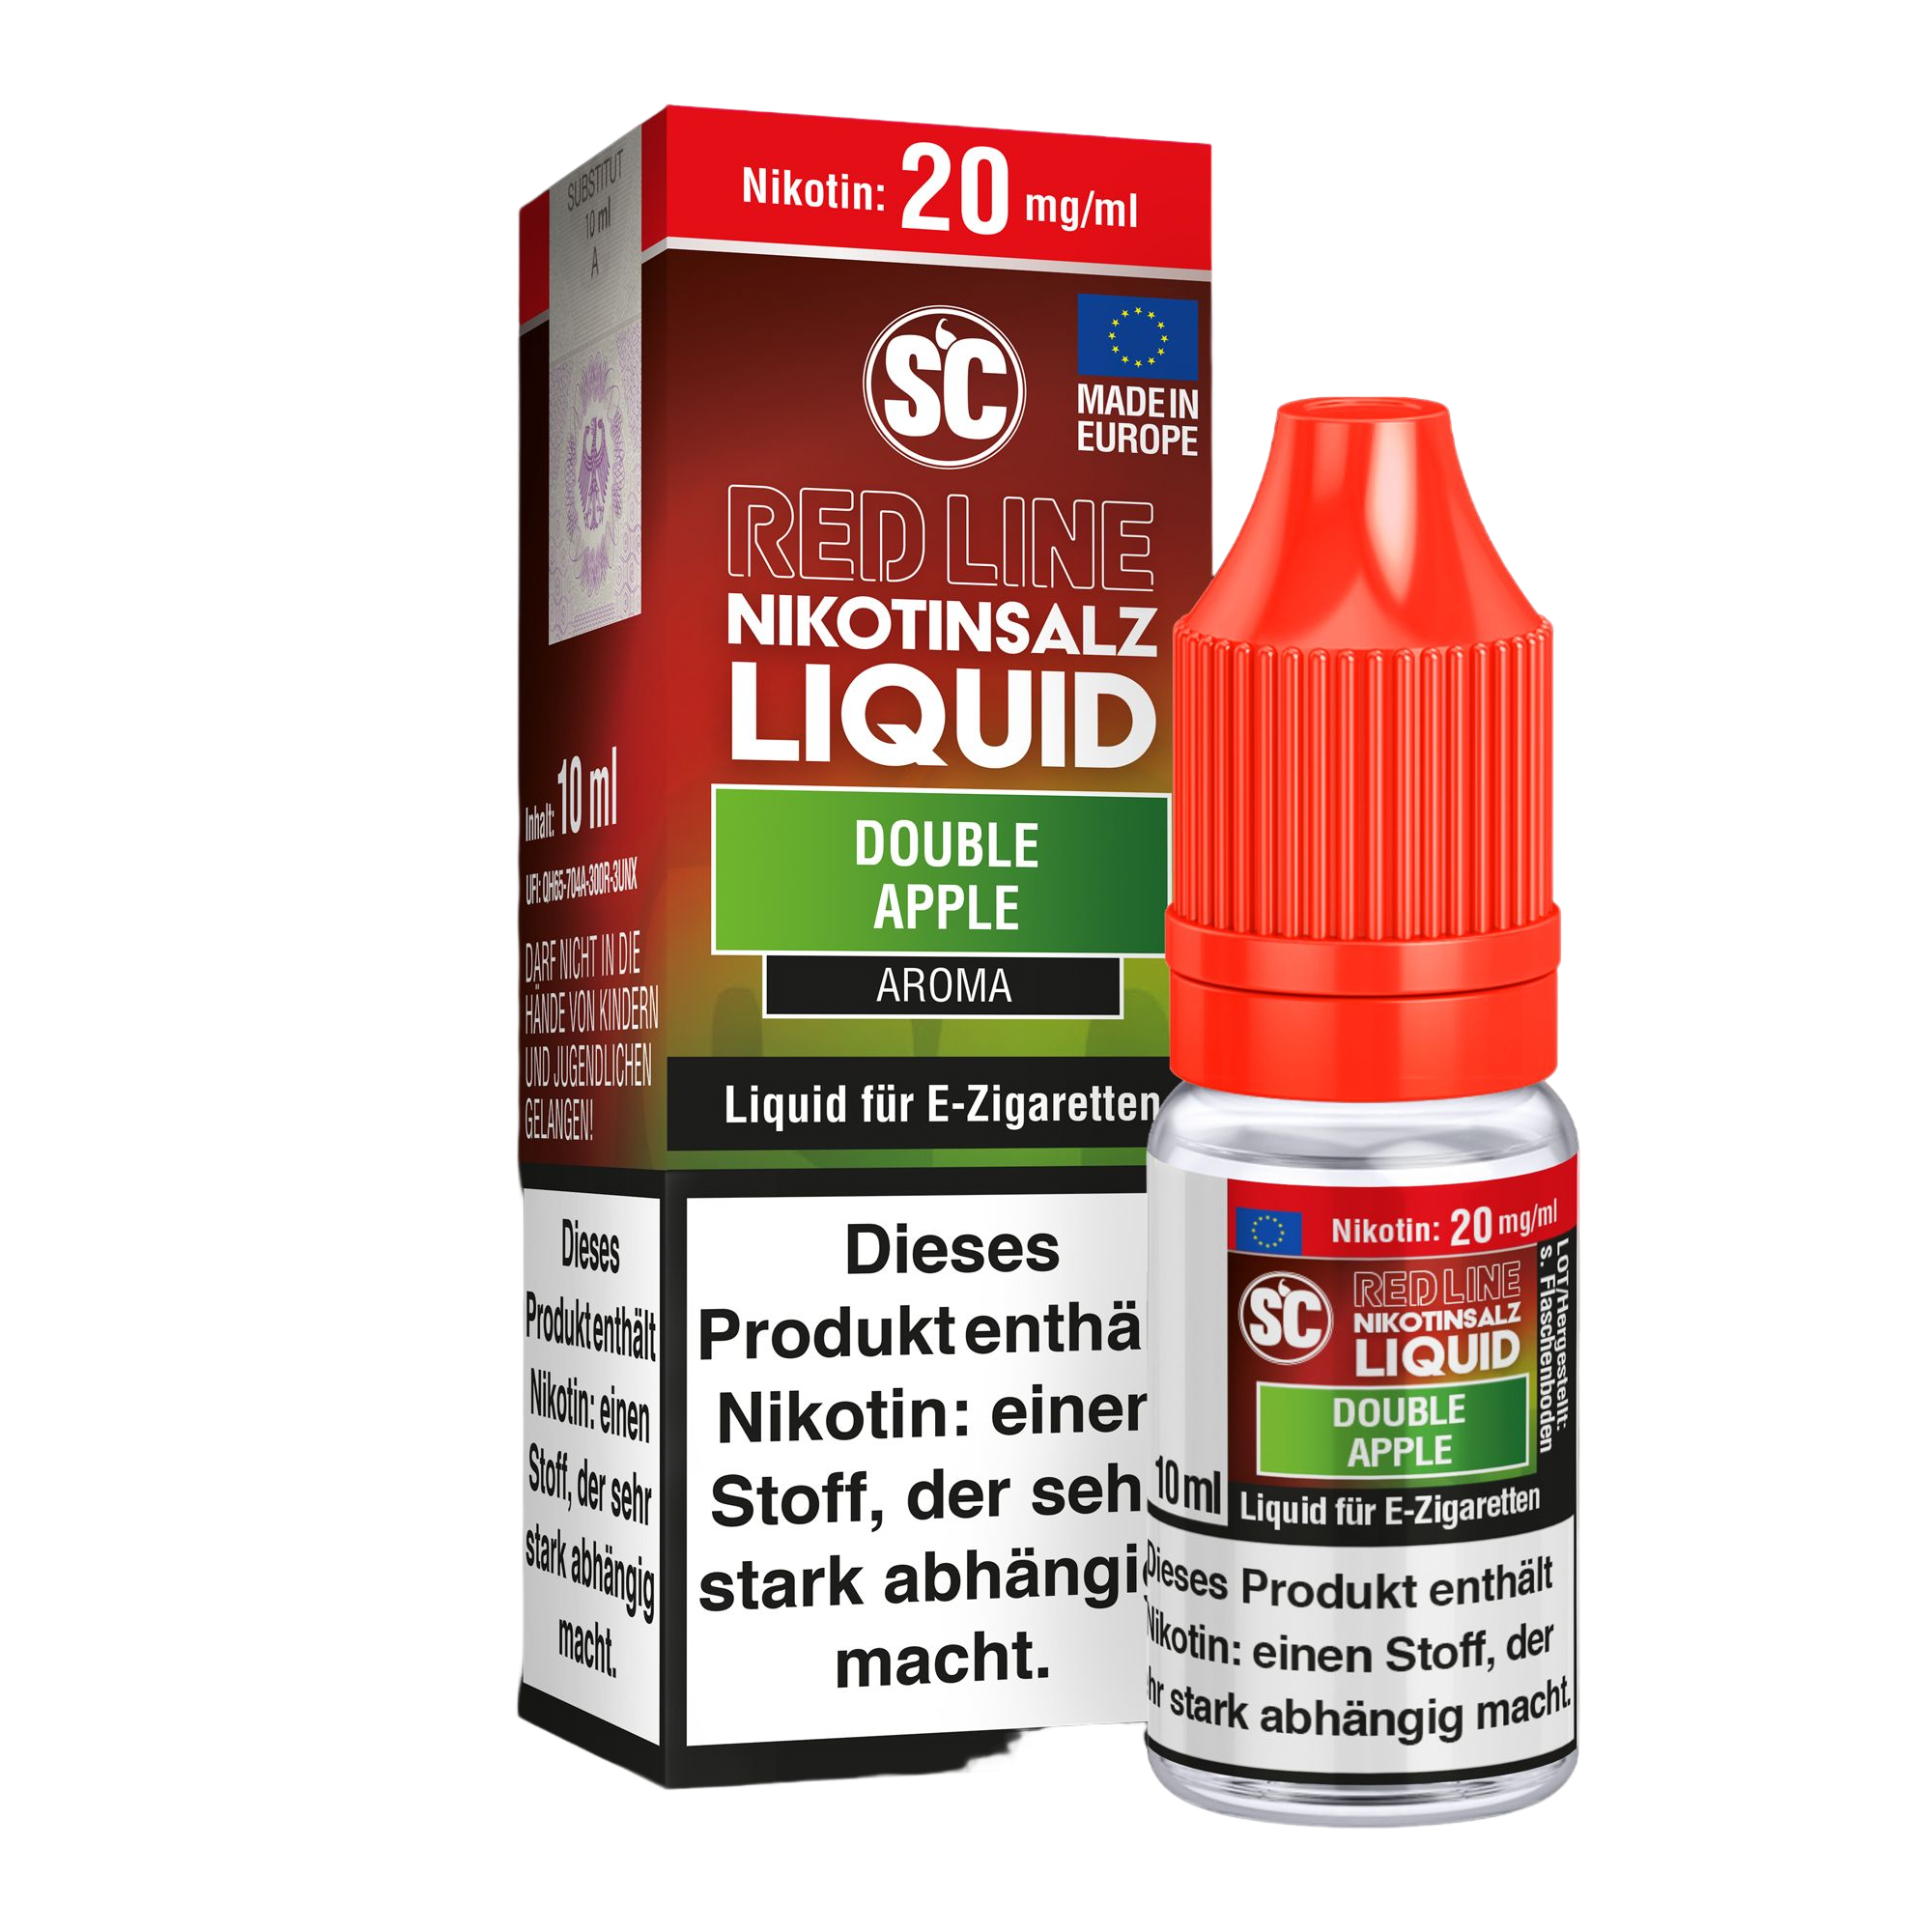 SC-RED LINE Double Apple - Nikotinsalz Liquid 10 mg/ml